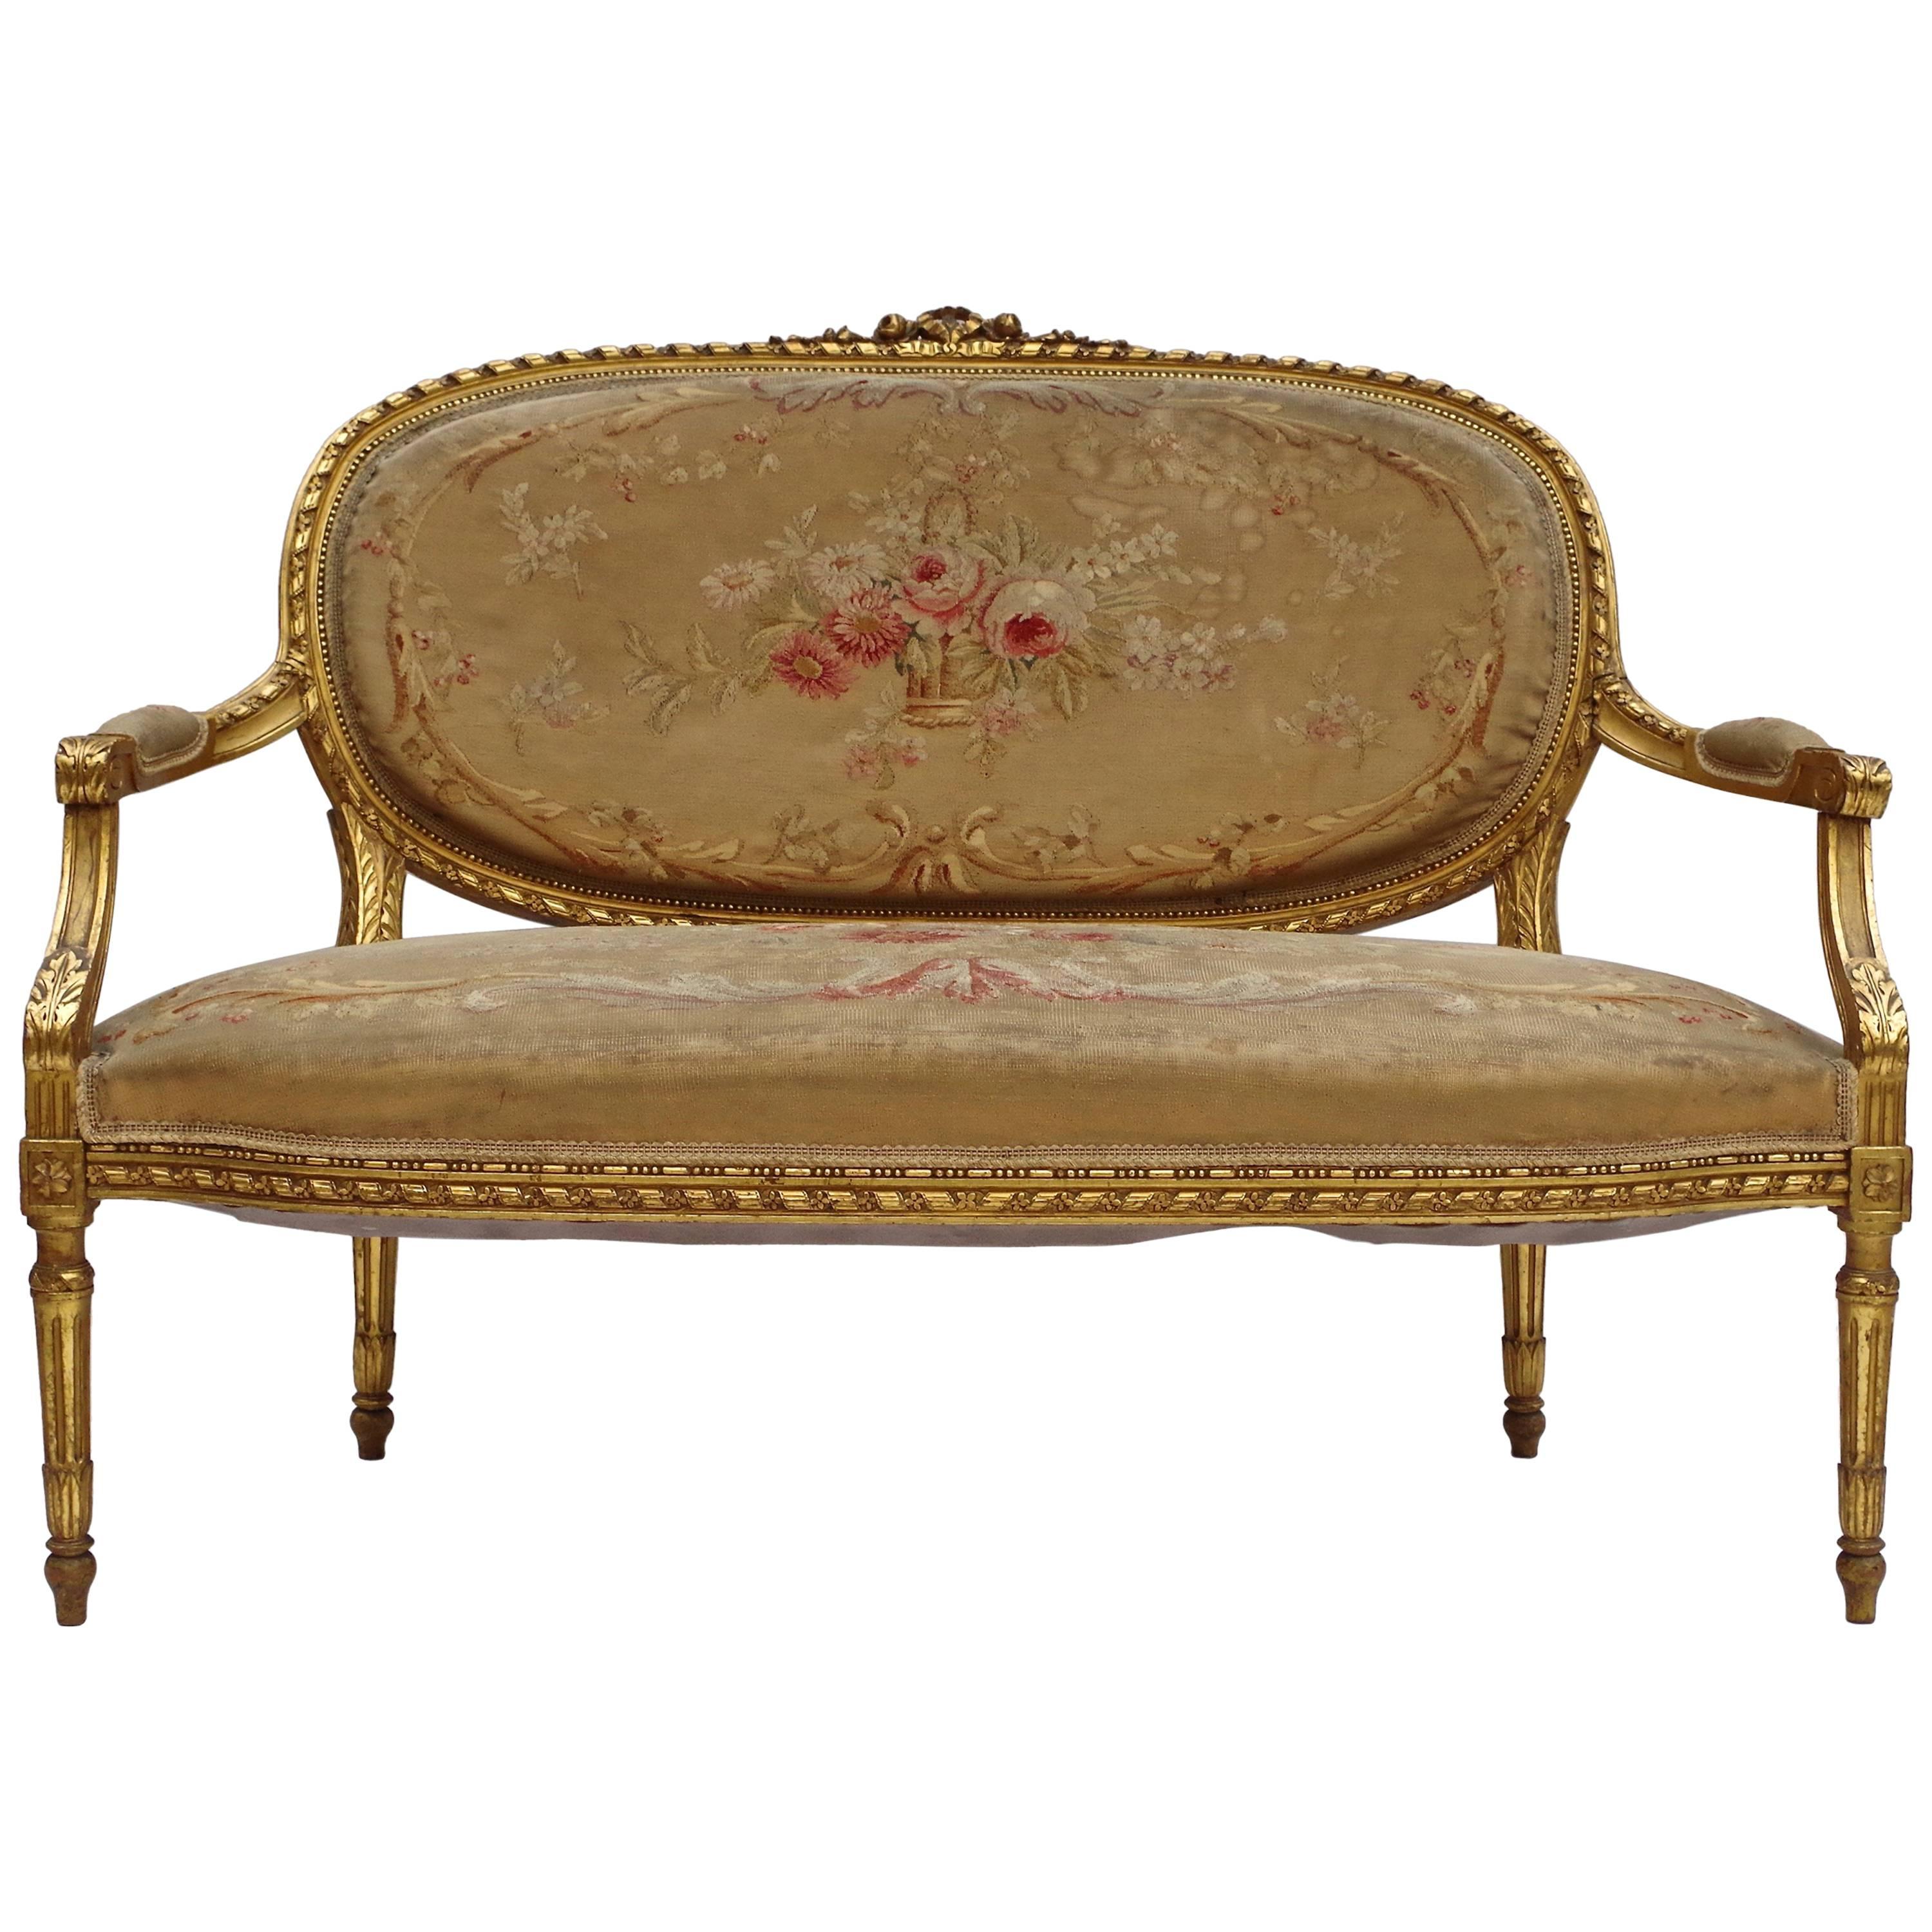 Giltwood Louis XVI Style Salon Furniture, circa 1880